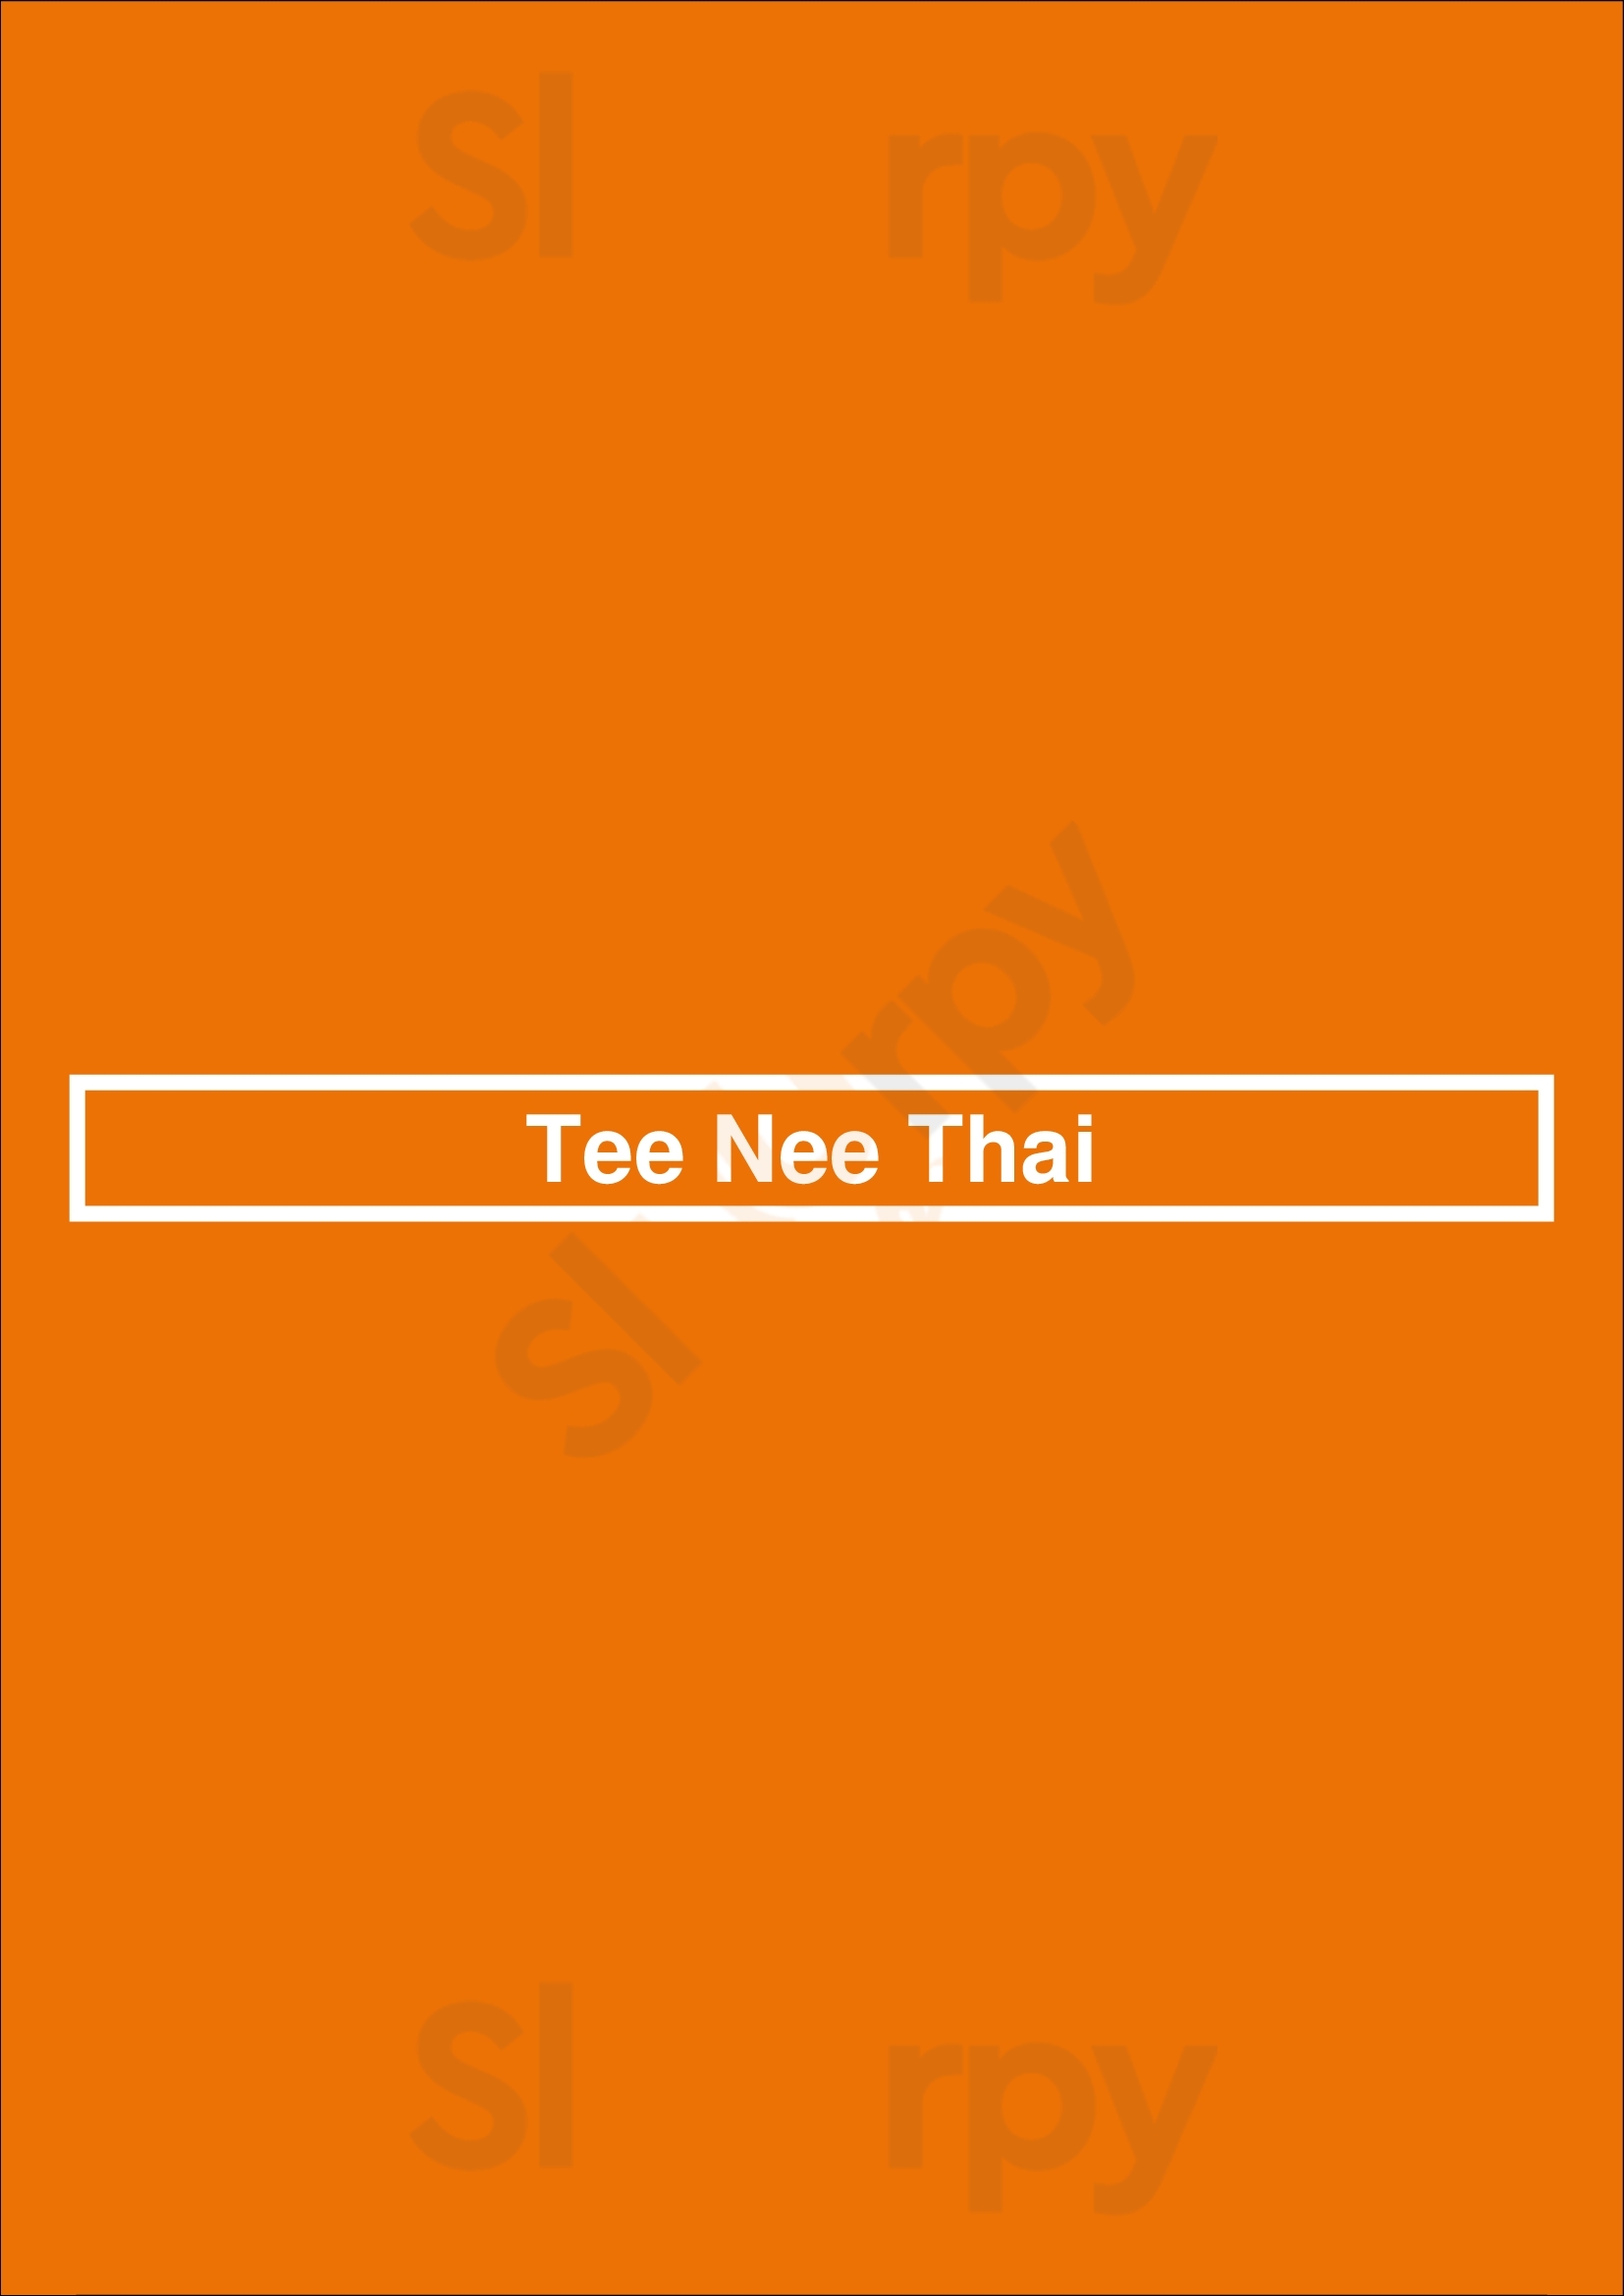 Tee Nee Thai San Jose Menu - 1